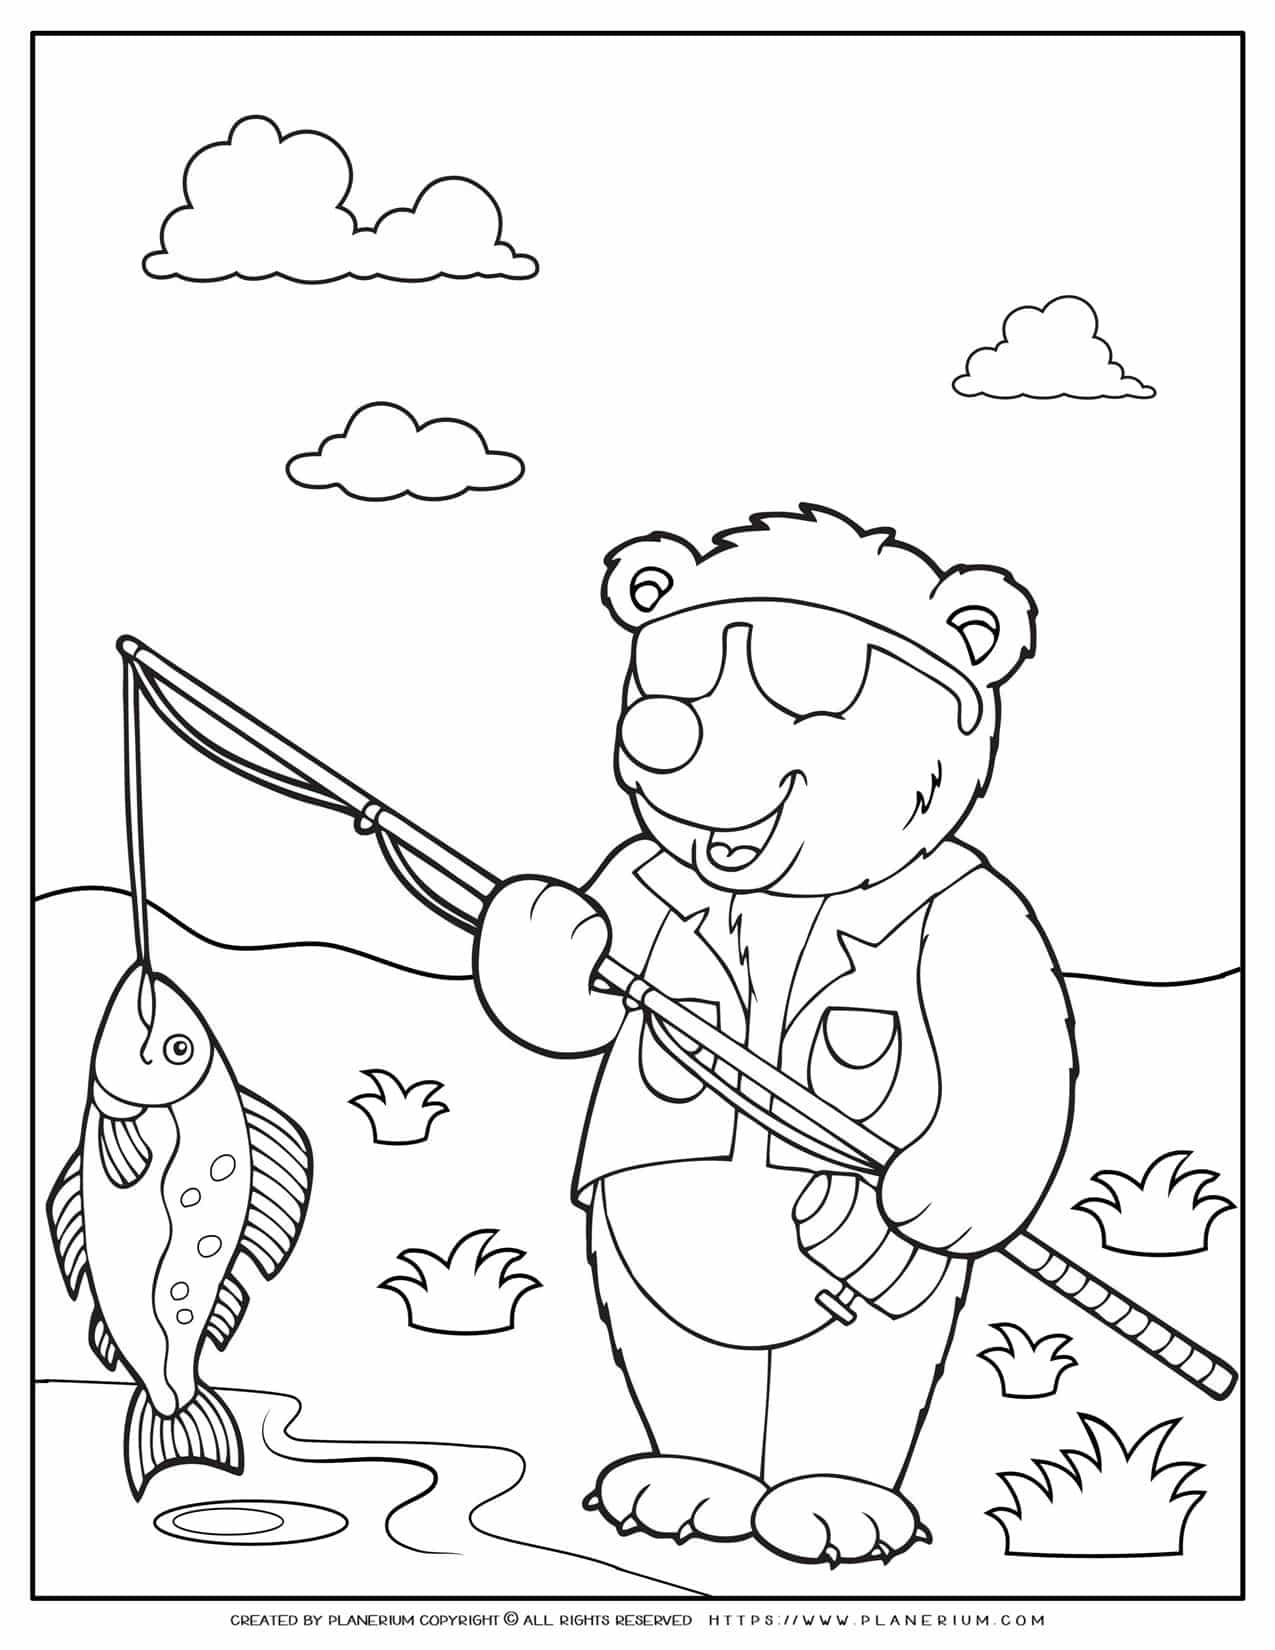 Animals Coloring Page - Bear Fishman | Planerium